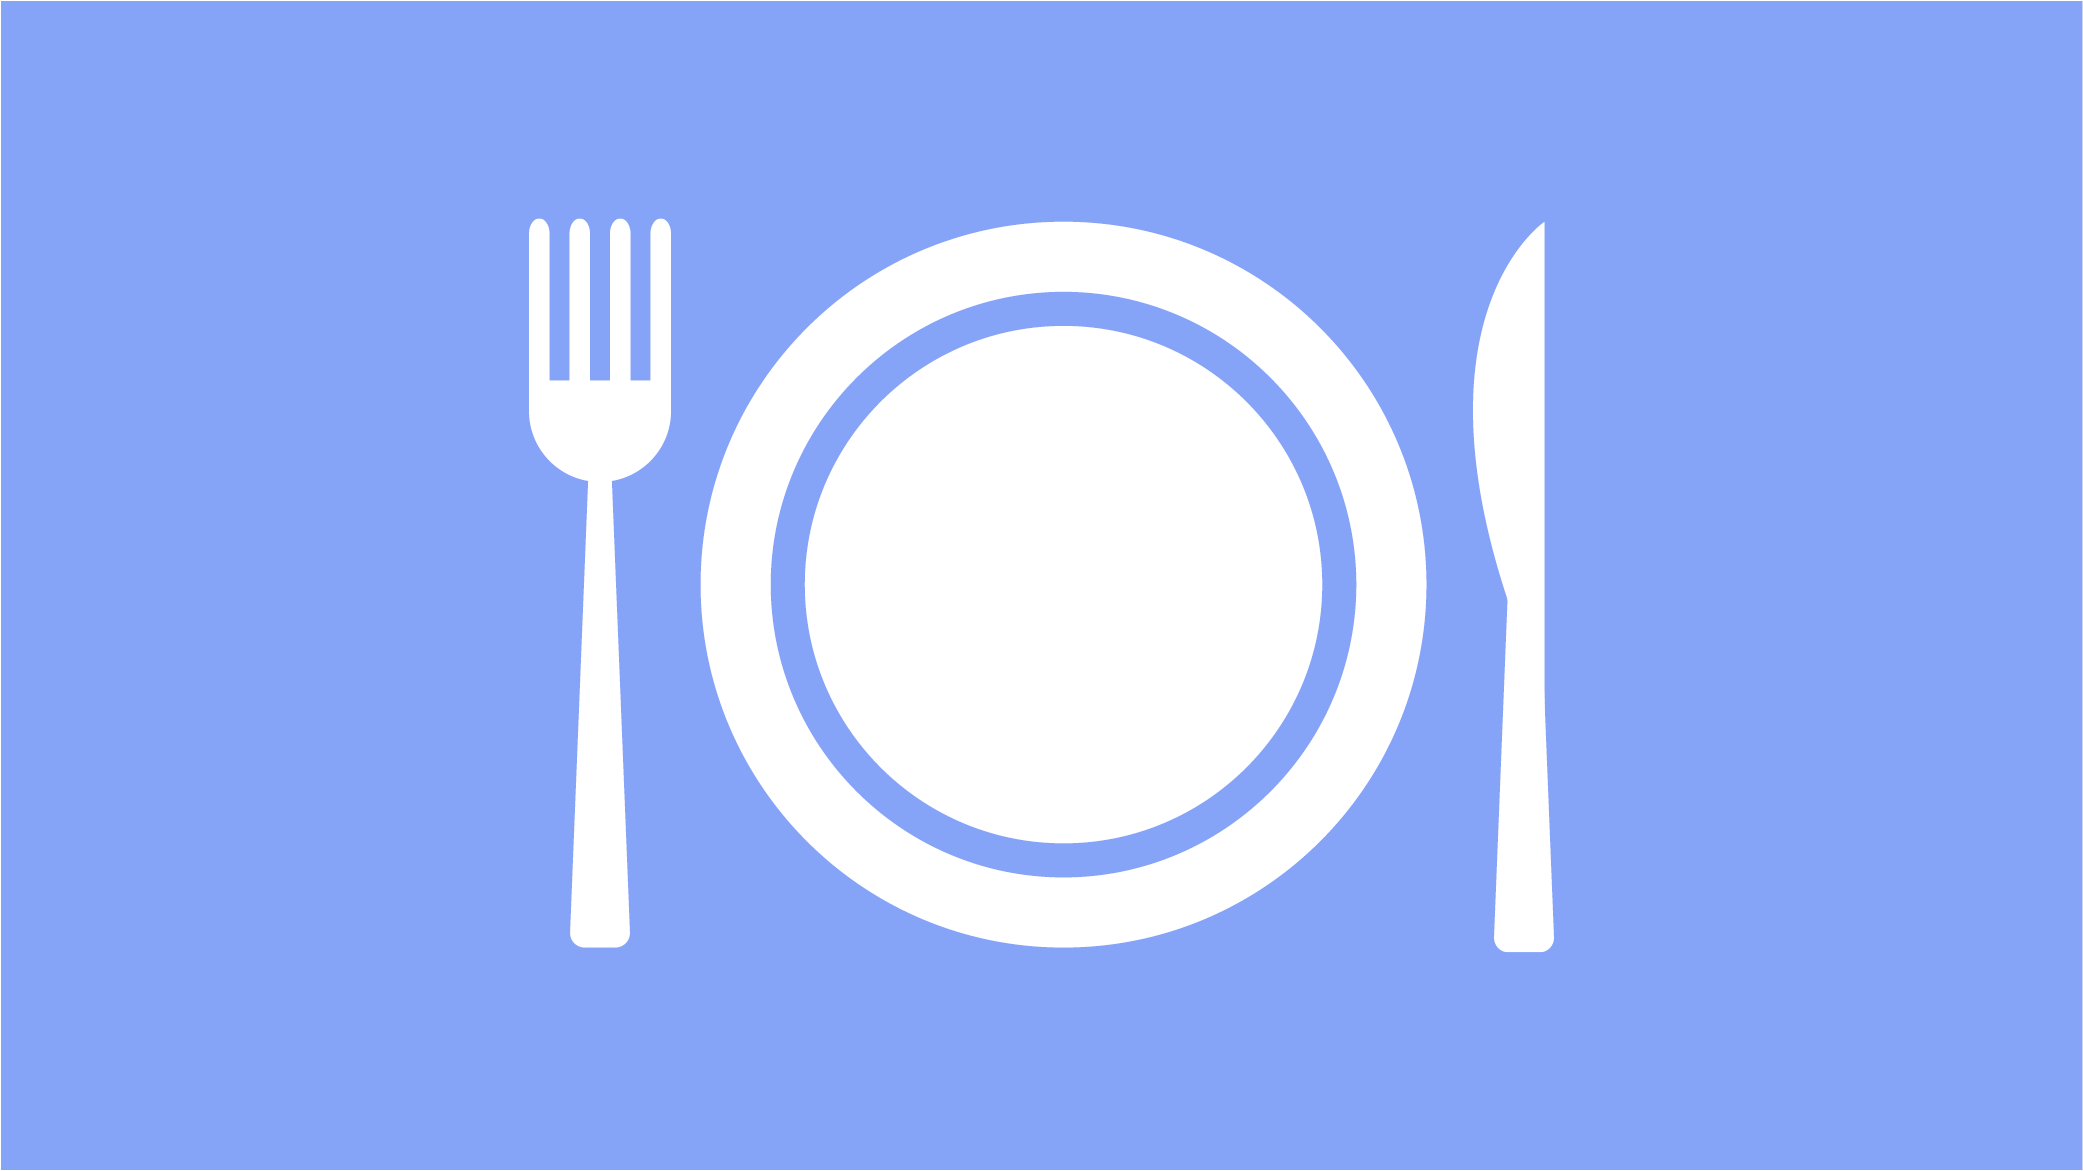 Illustration of plate, knife and fork - white pictogram on light blue background